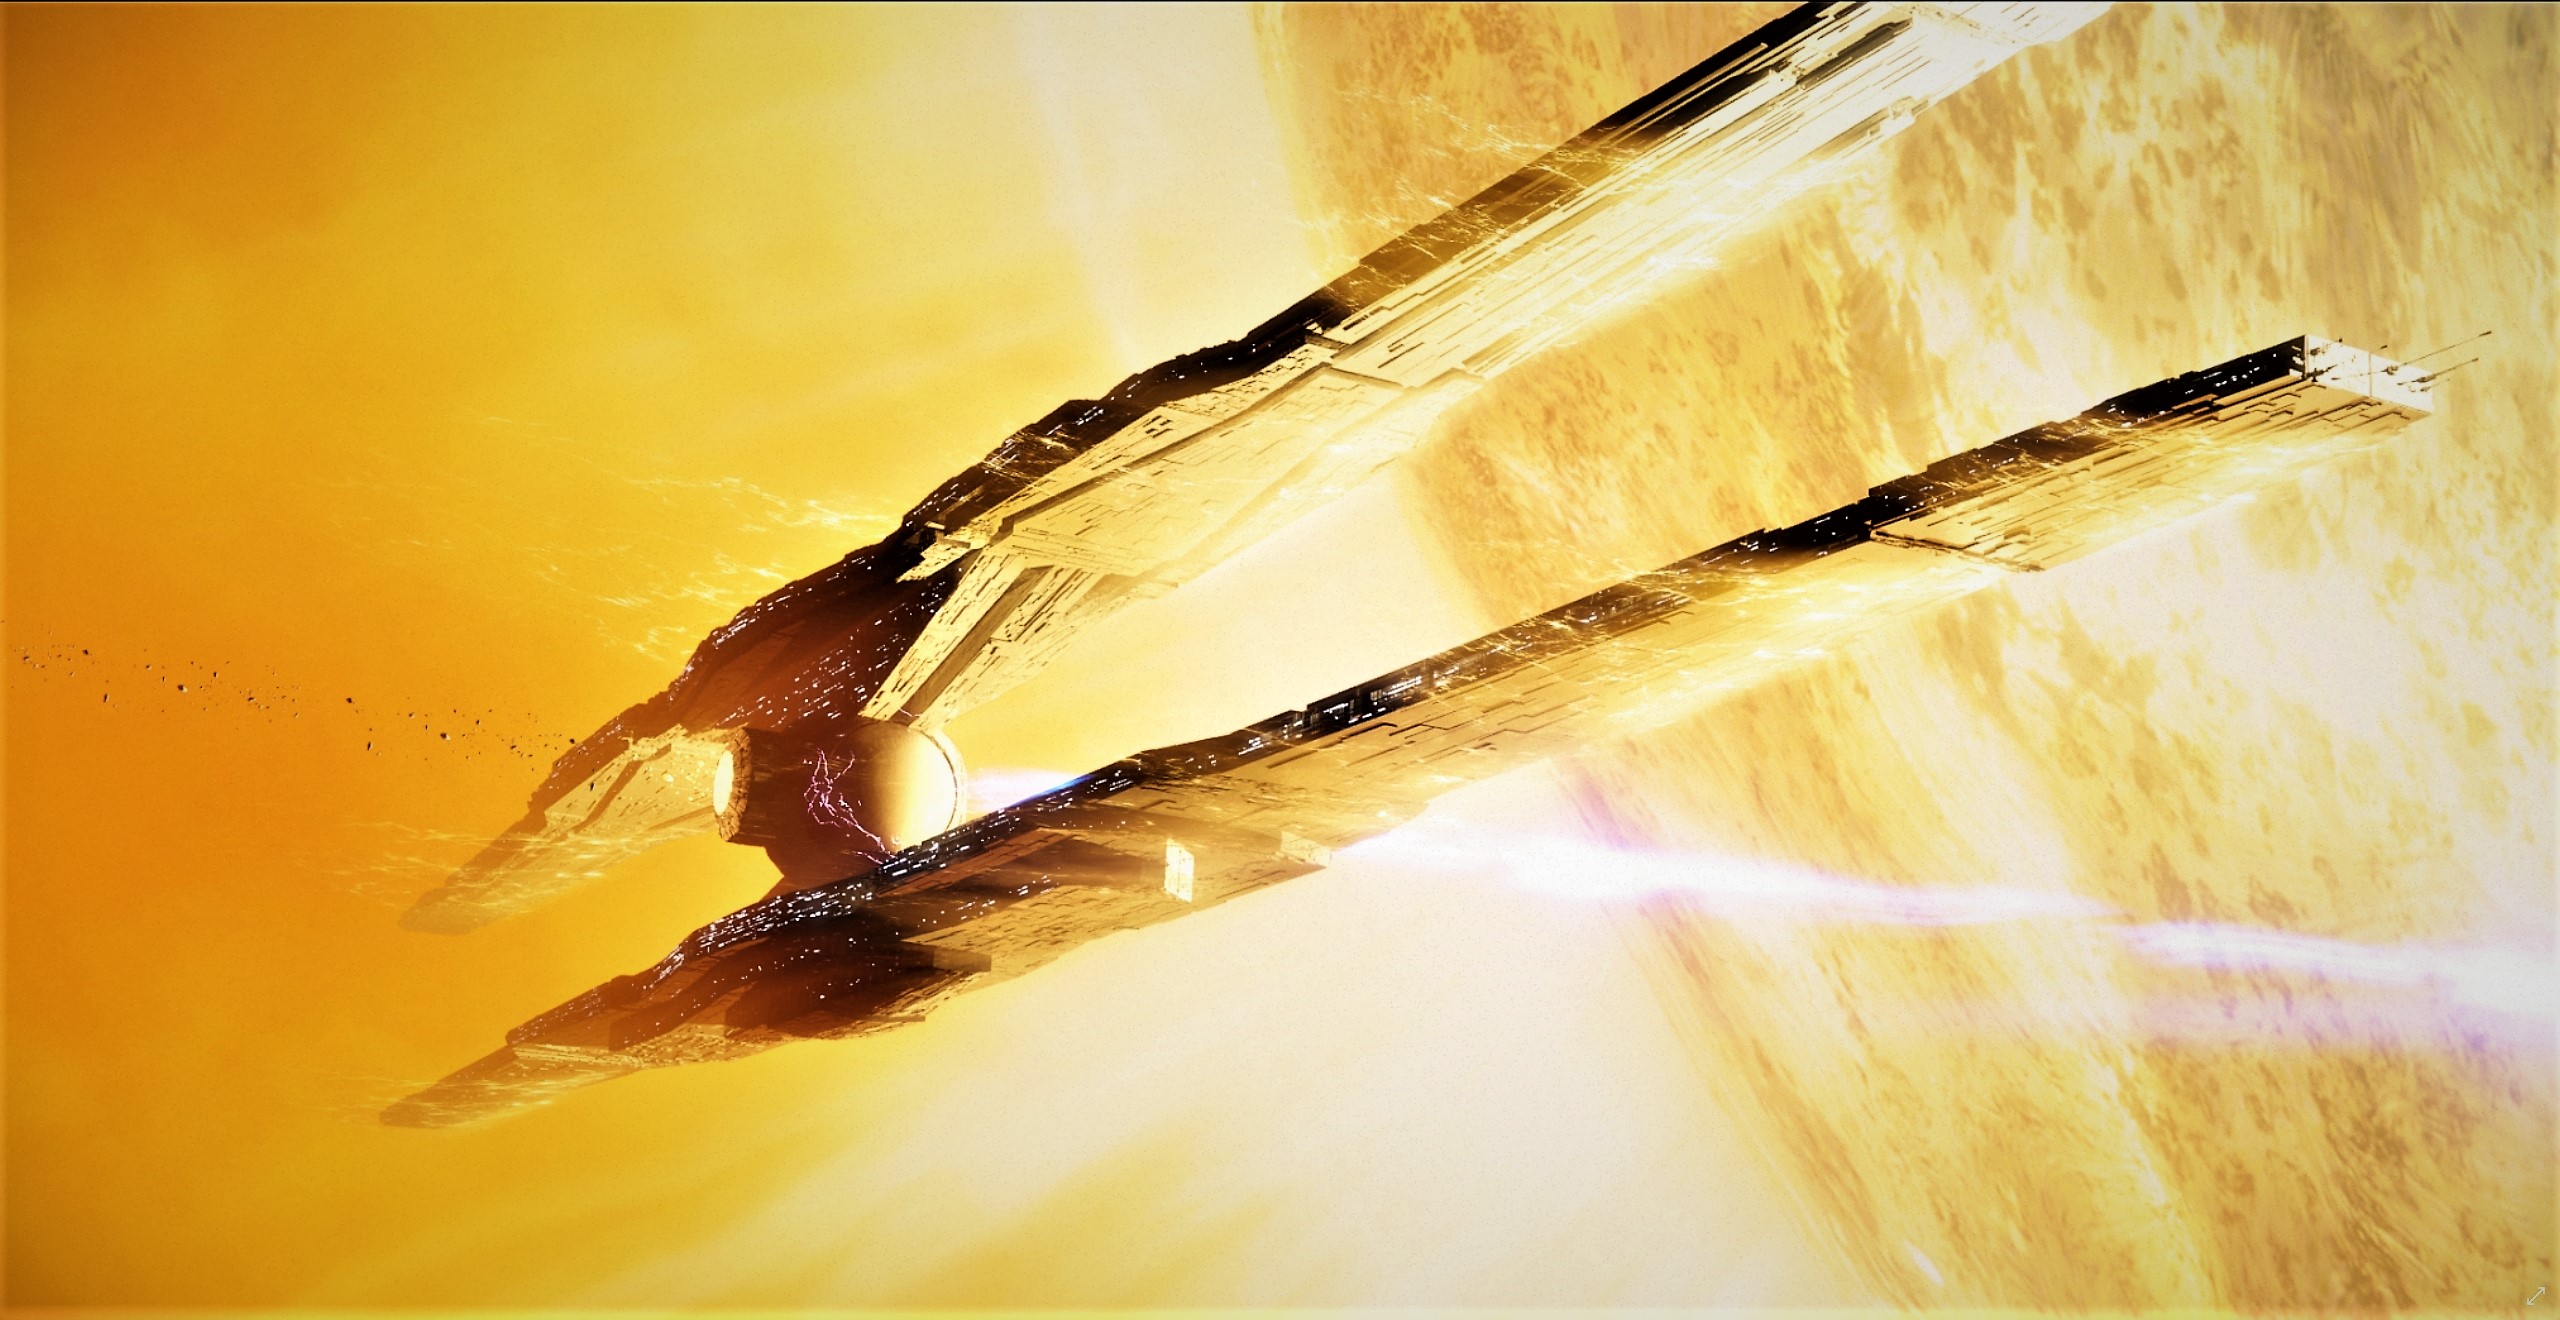 Destiny (video game), Space, Sun Wallpaper